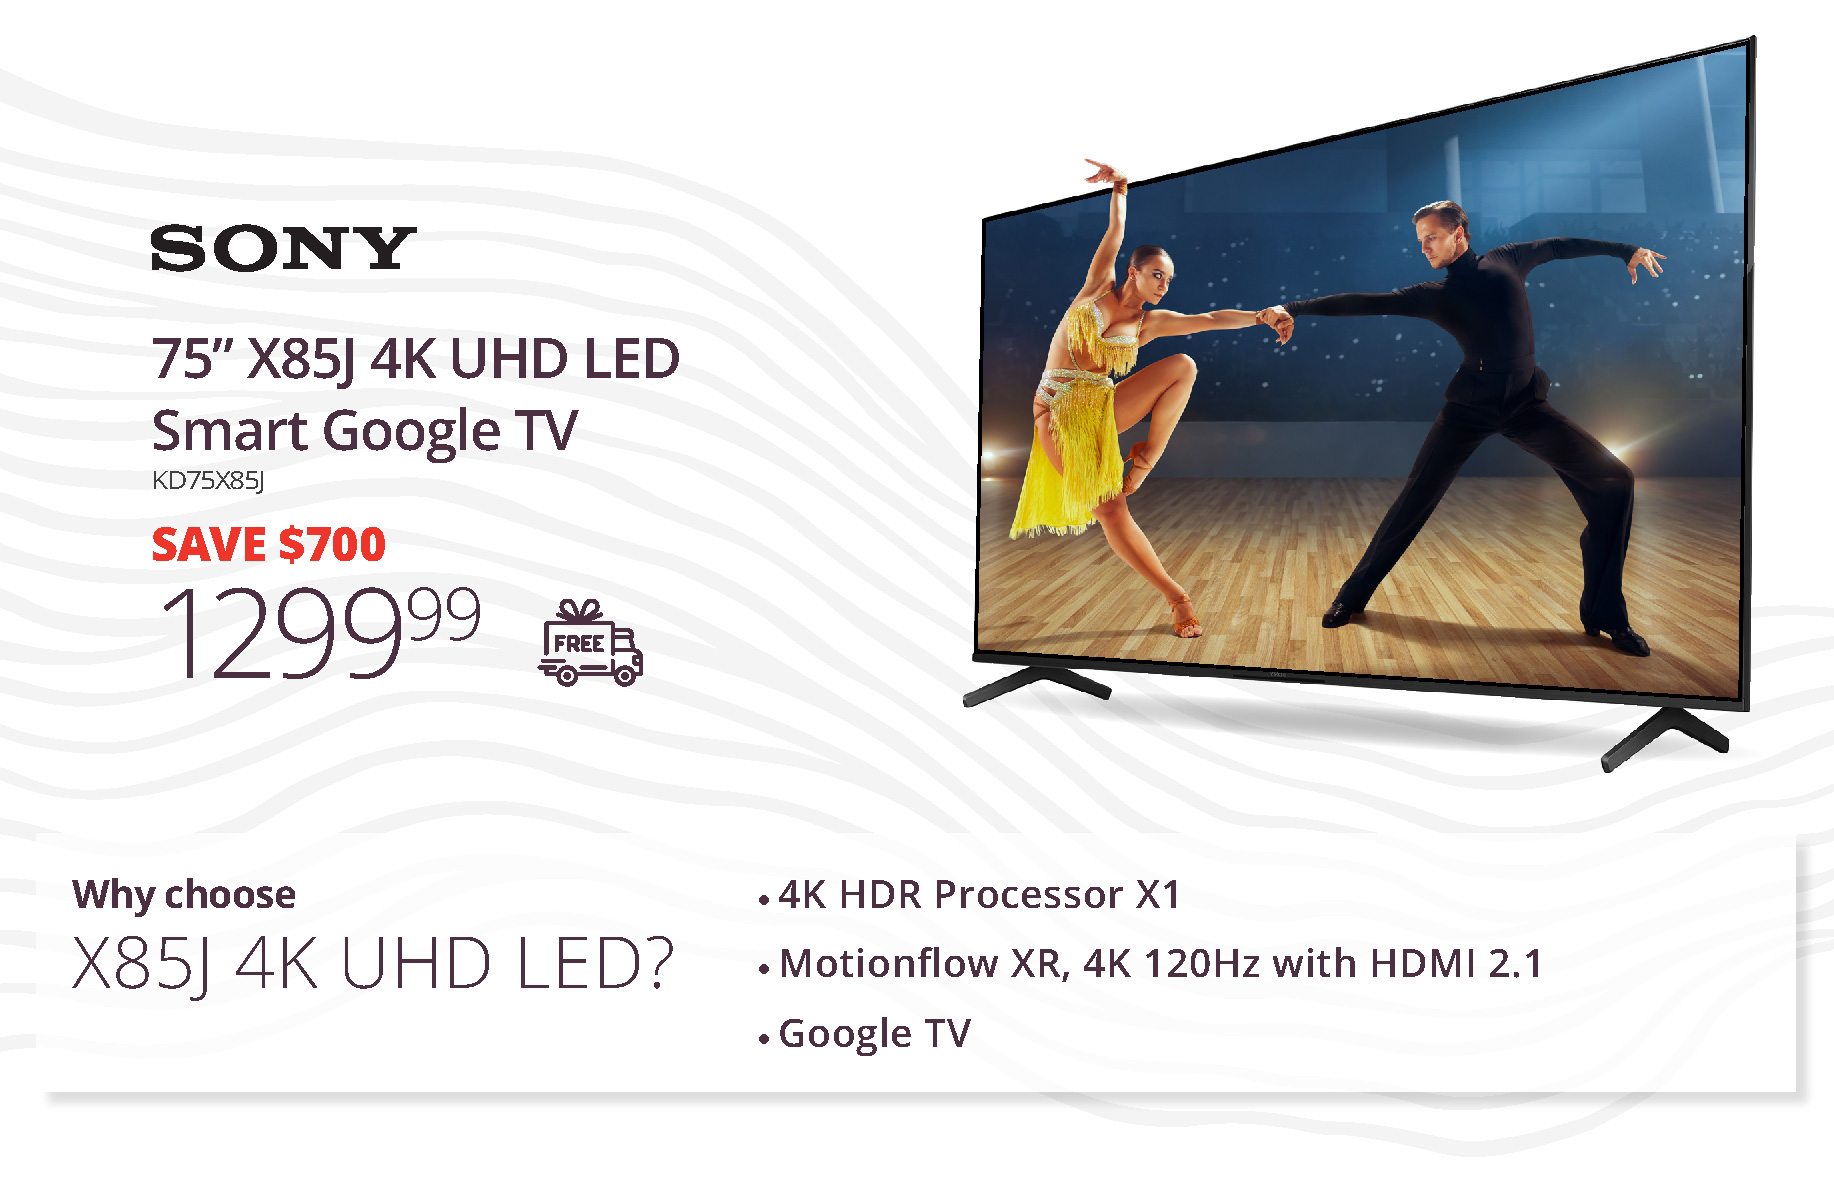 SONY 75” x85j 4K UHD LED Smart Google TV | KD75X85J | SAVE $700 | 1,299.99 | Why choose X85J 4K UHD LED? | 4K HDR Processor X1 • Motionflow XR, 4K 120Hz with HDMI 2.1 • Google TV